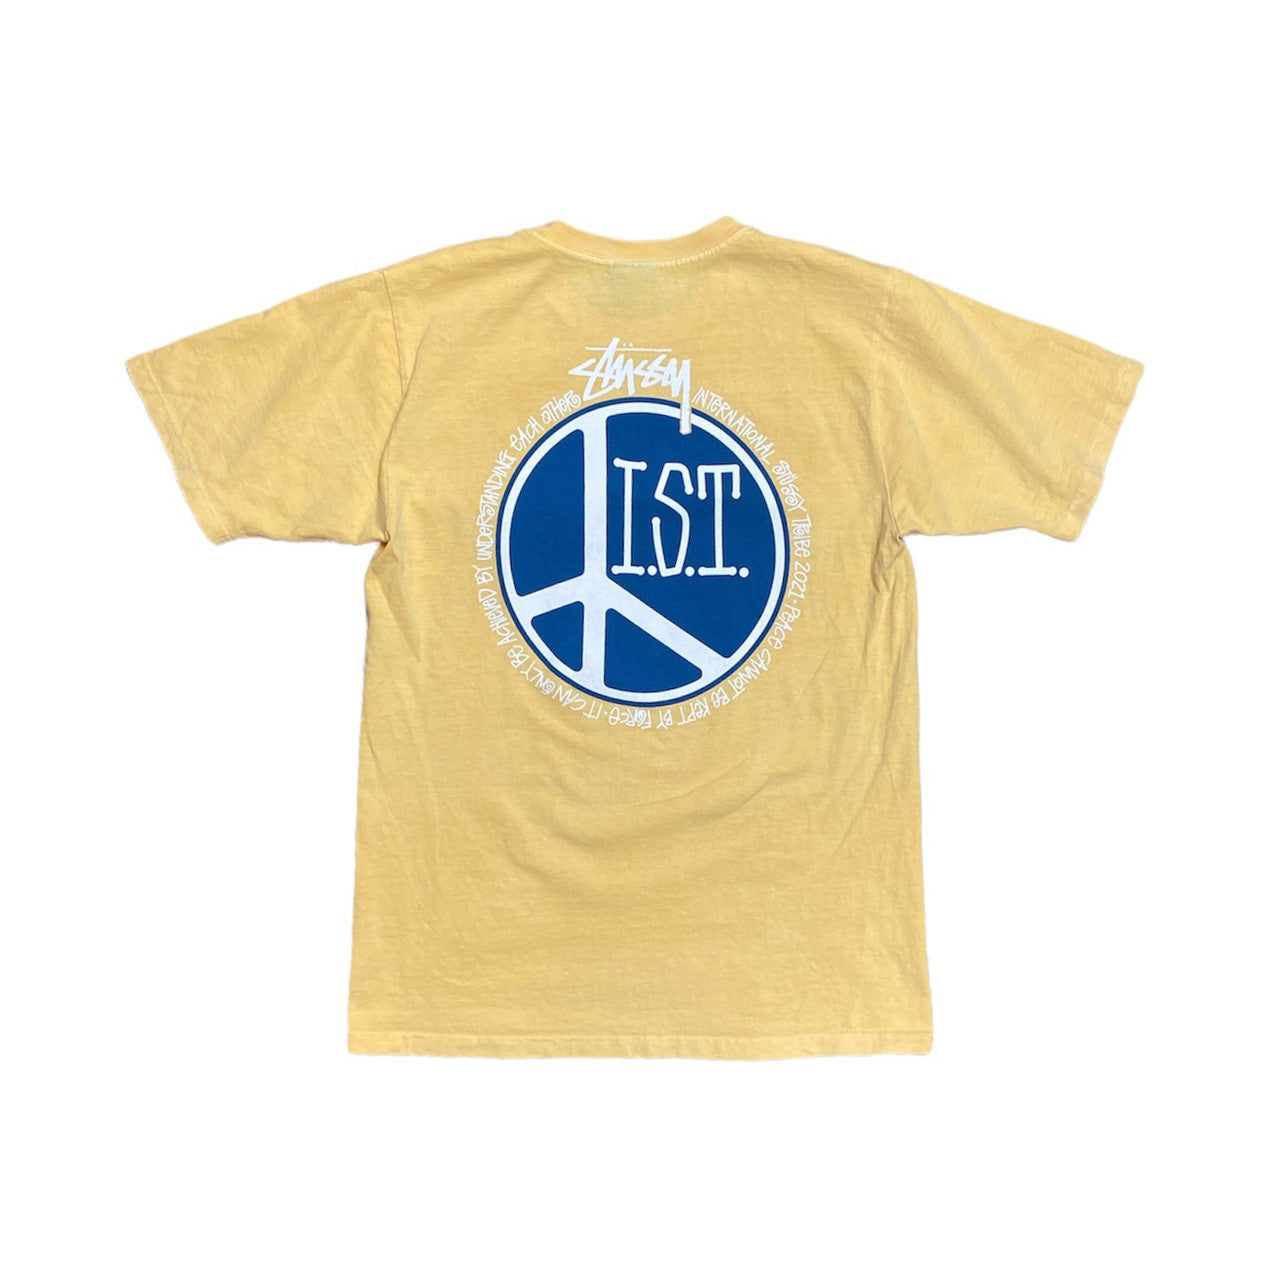 Stussy I.S.T Peace Tshirt